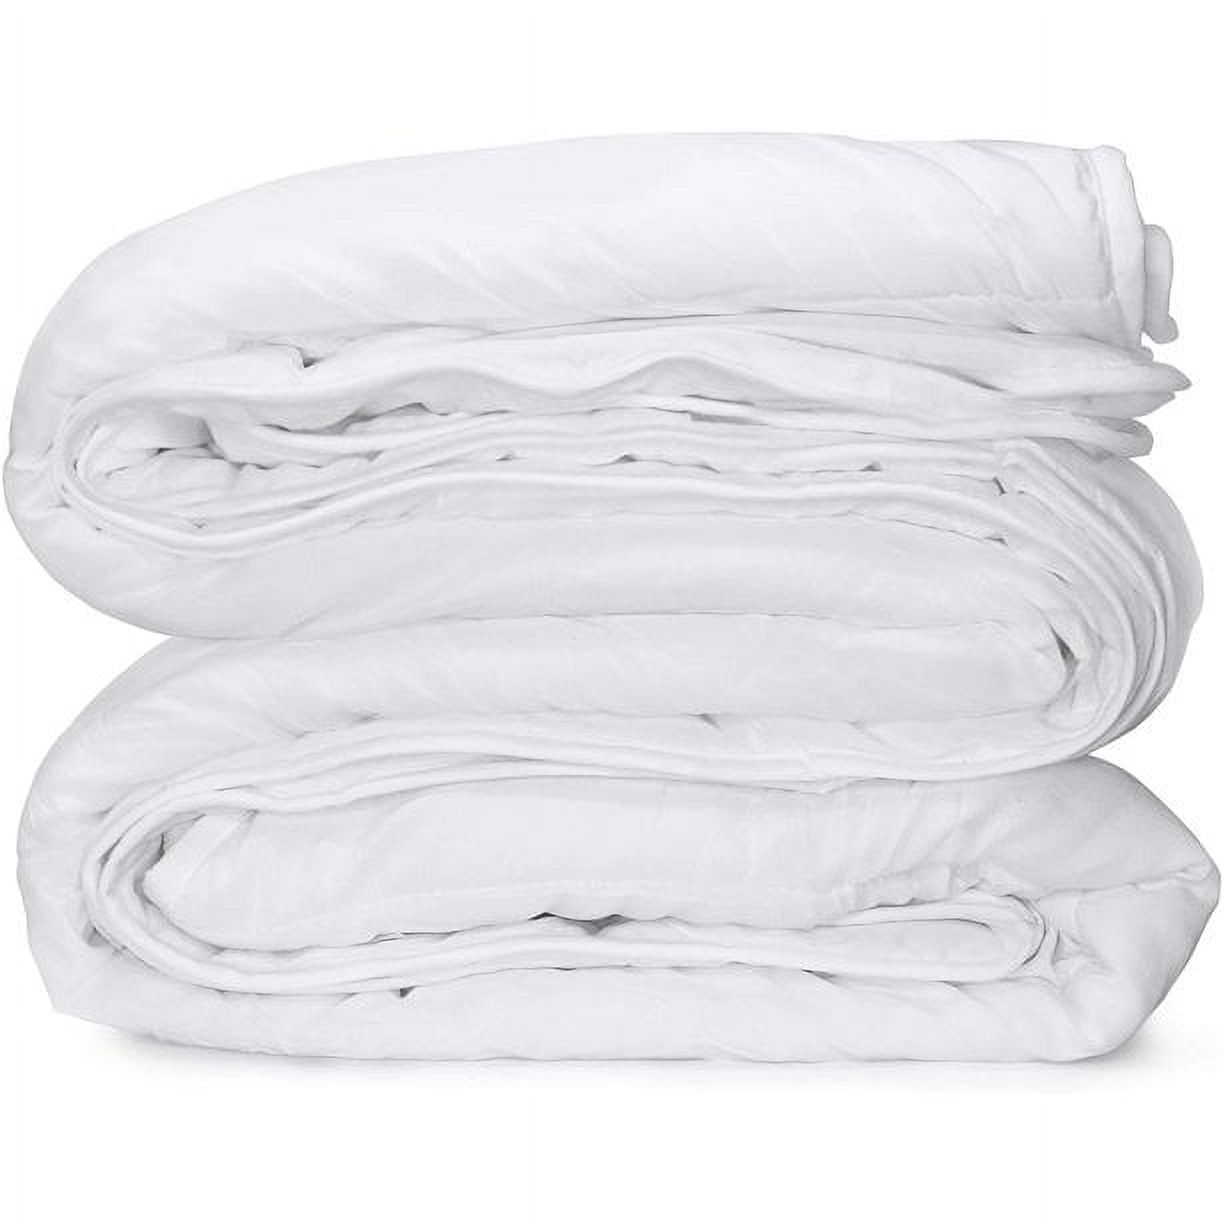 Celeep Thin Duvet Insert (86"x 86") - White, All Season Down Alternative Comforter Insert, Soft, Plush Microfiber Fill, Machine Washable, Queen Size - image 1 of 7